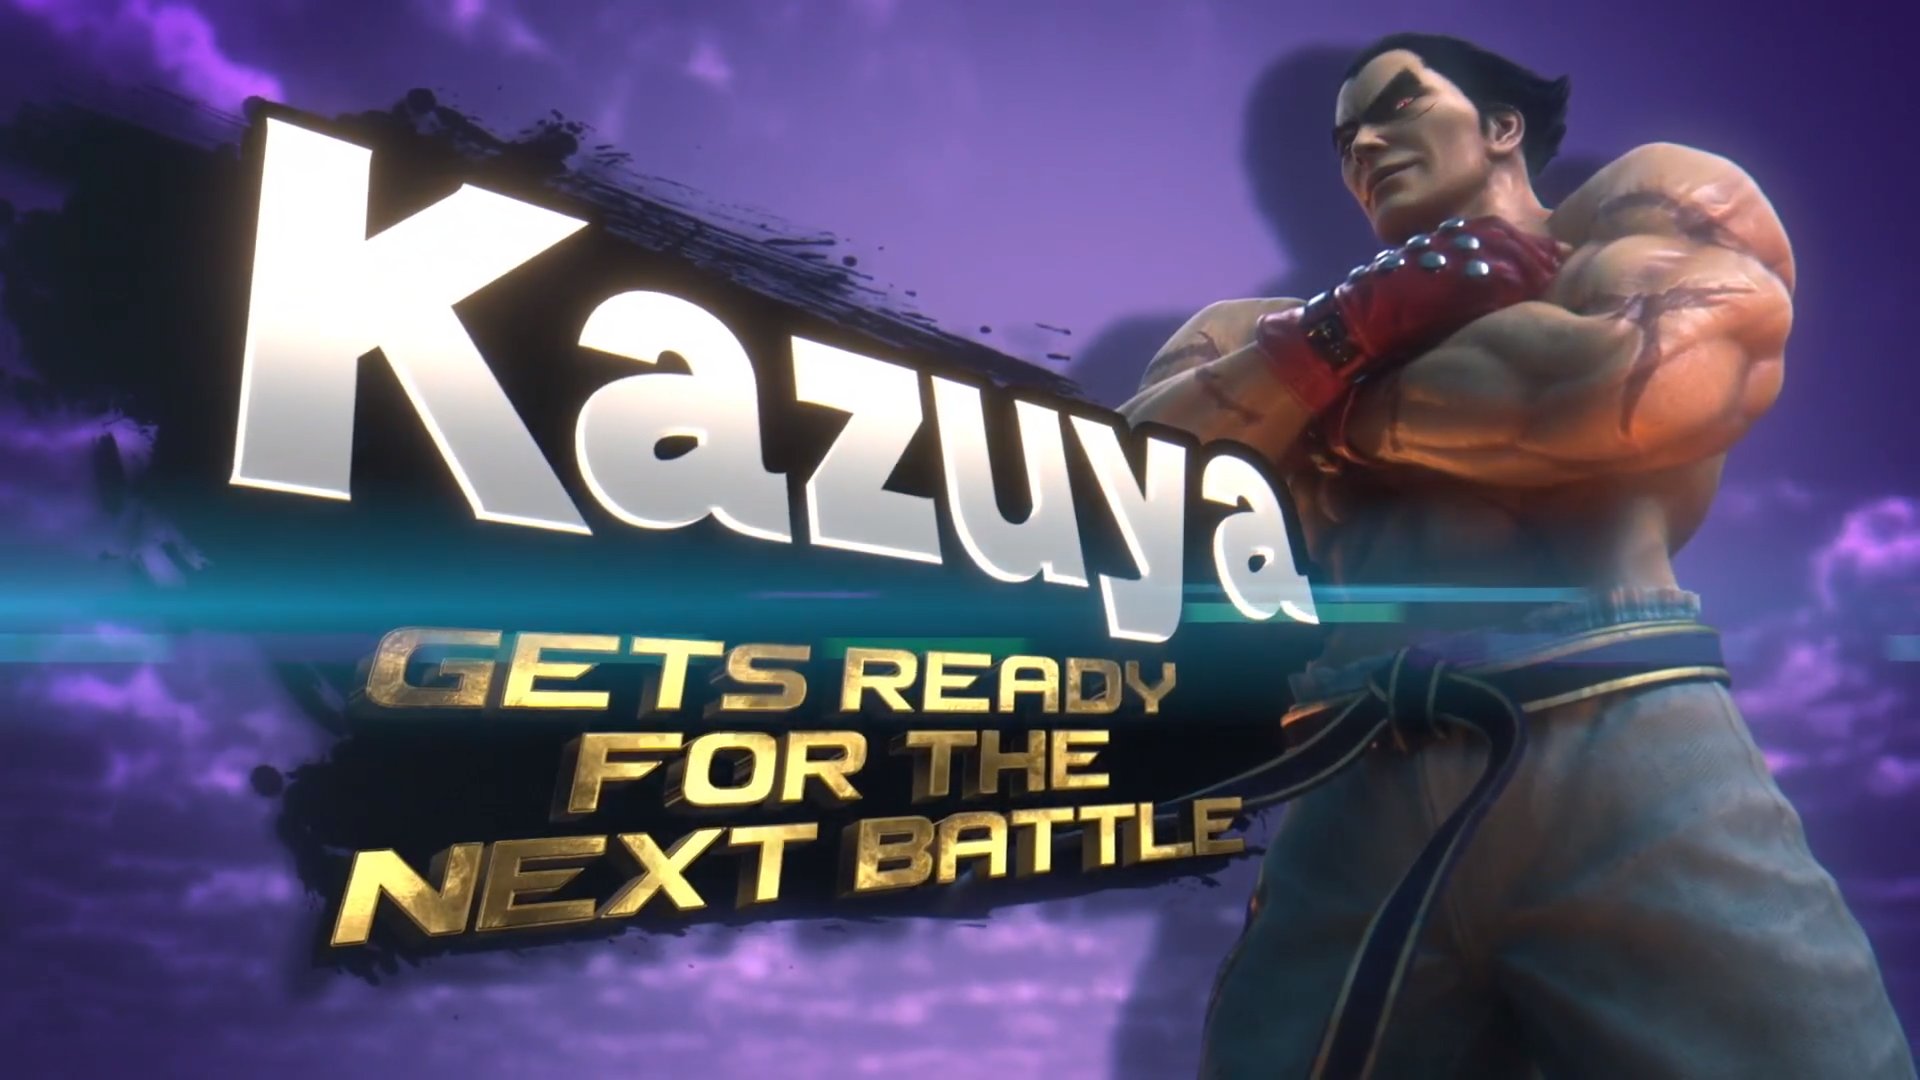 The next Smash Bros Ultimate fighter is Tekken’s Kazuya Mishima